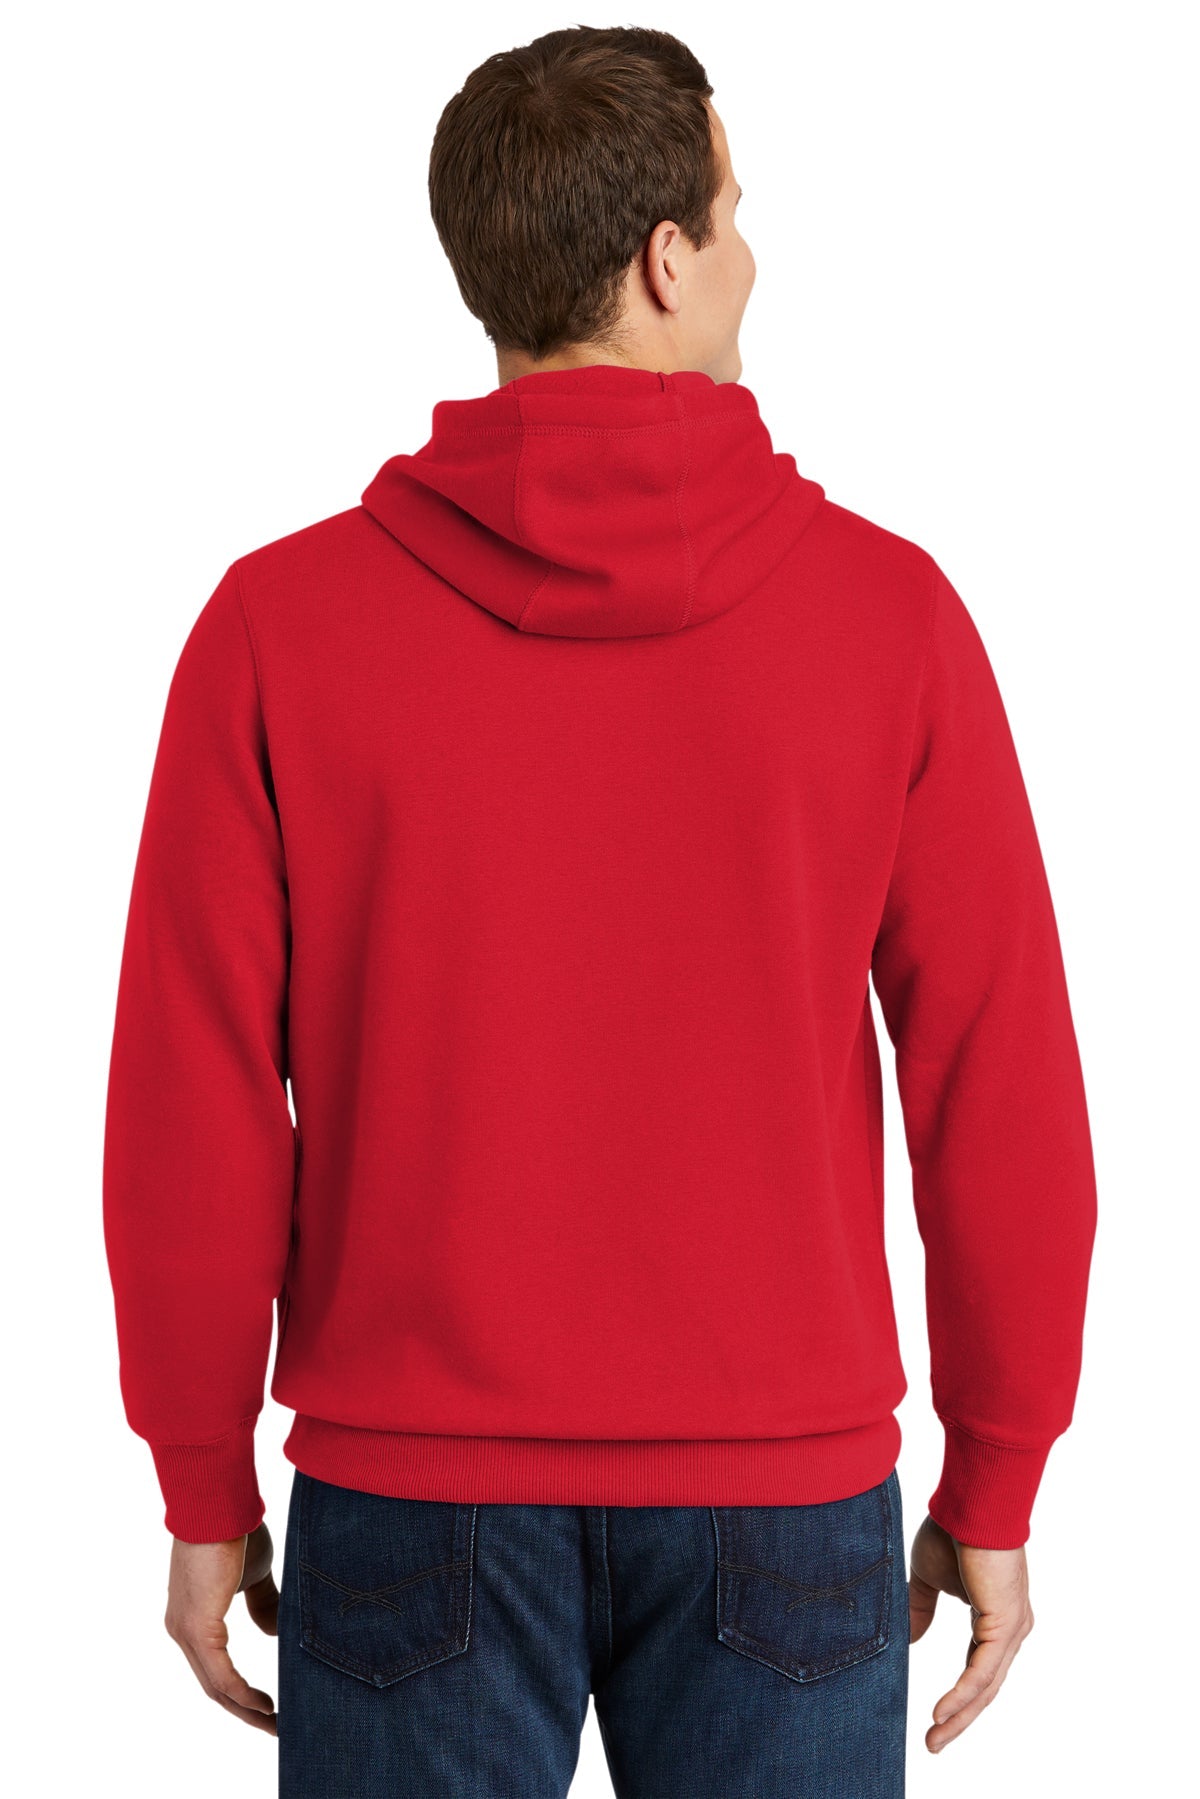 sport-tek_st254 _true red_company_logo_sweatshirts